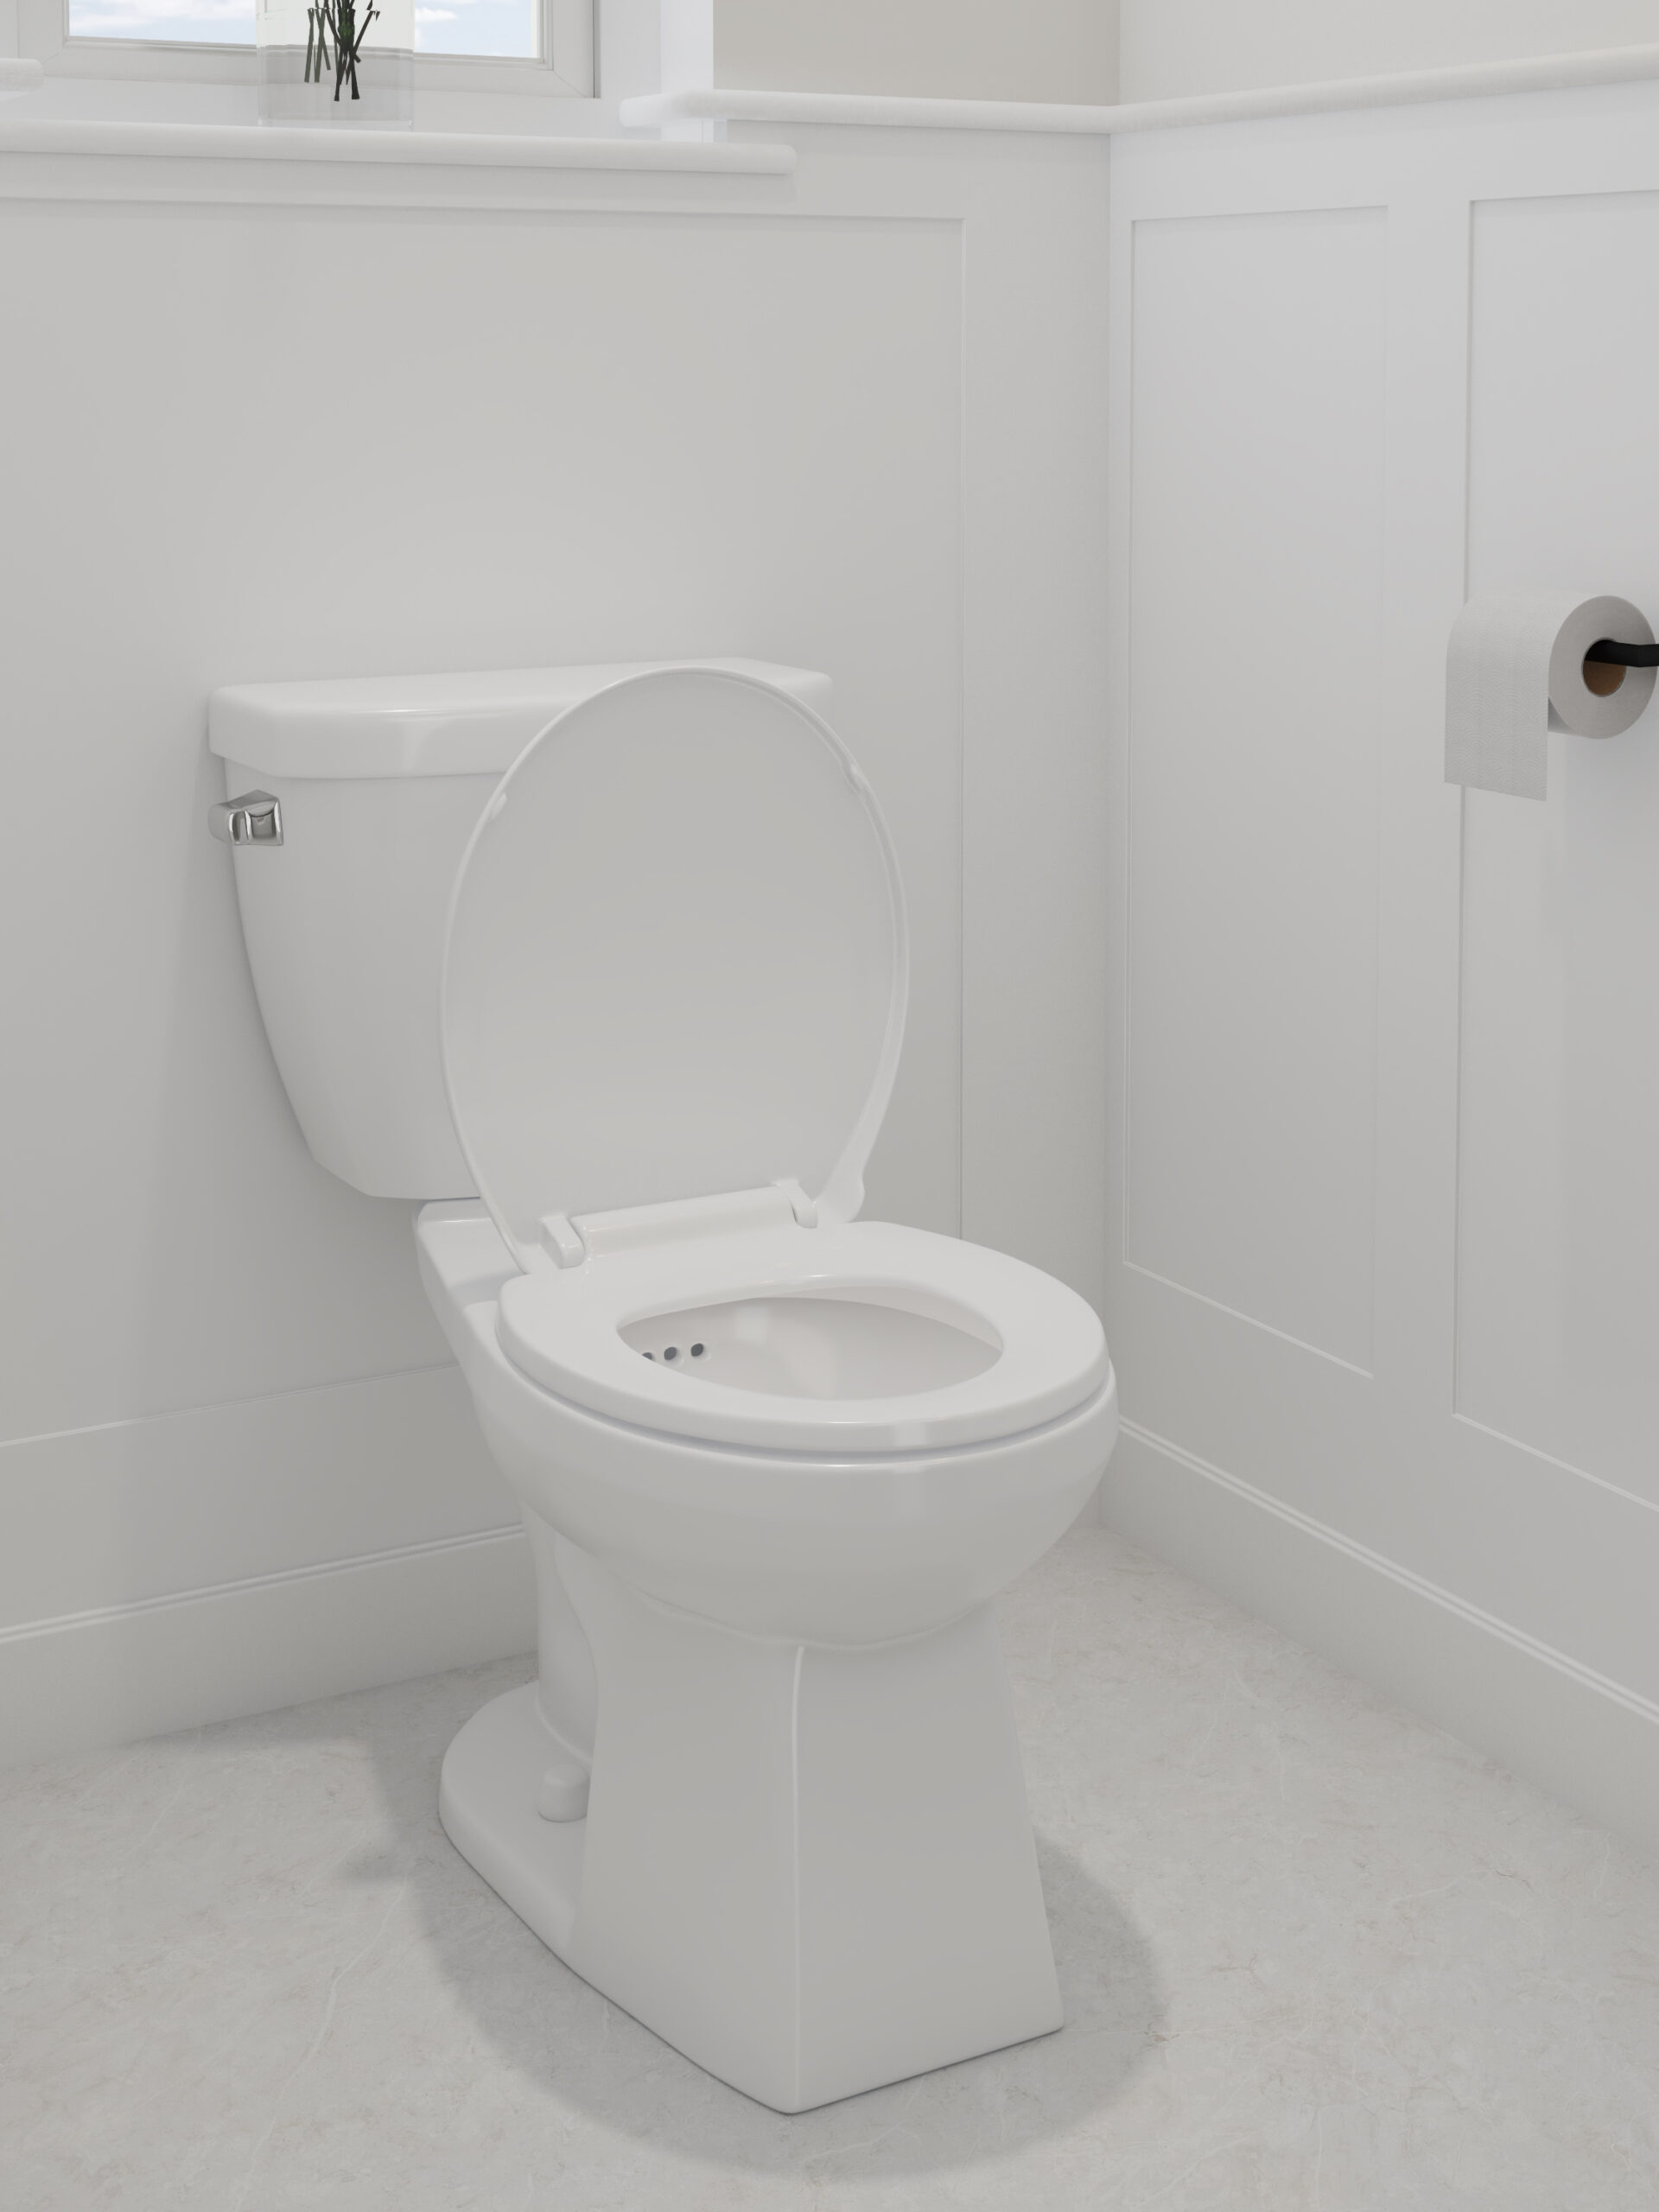 Carlin FLUSH GUARD Toilet - 4720FGFVU - Closeup Angle View Room Scene